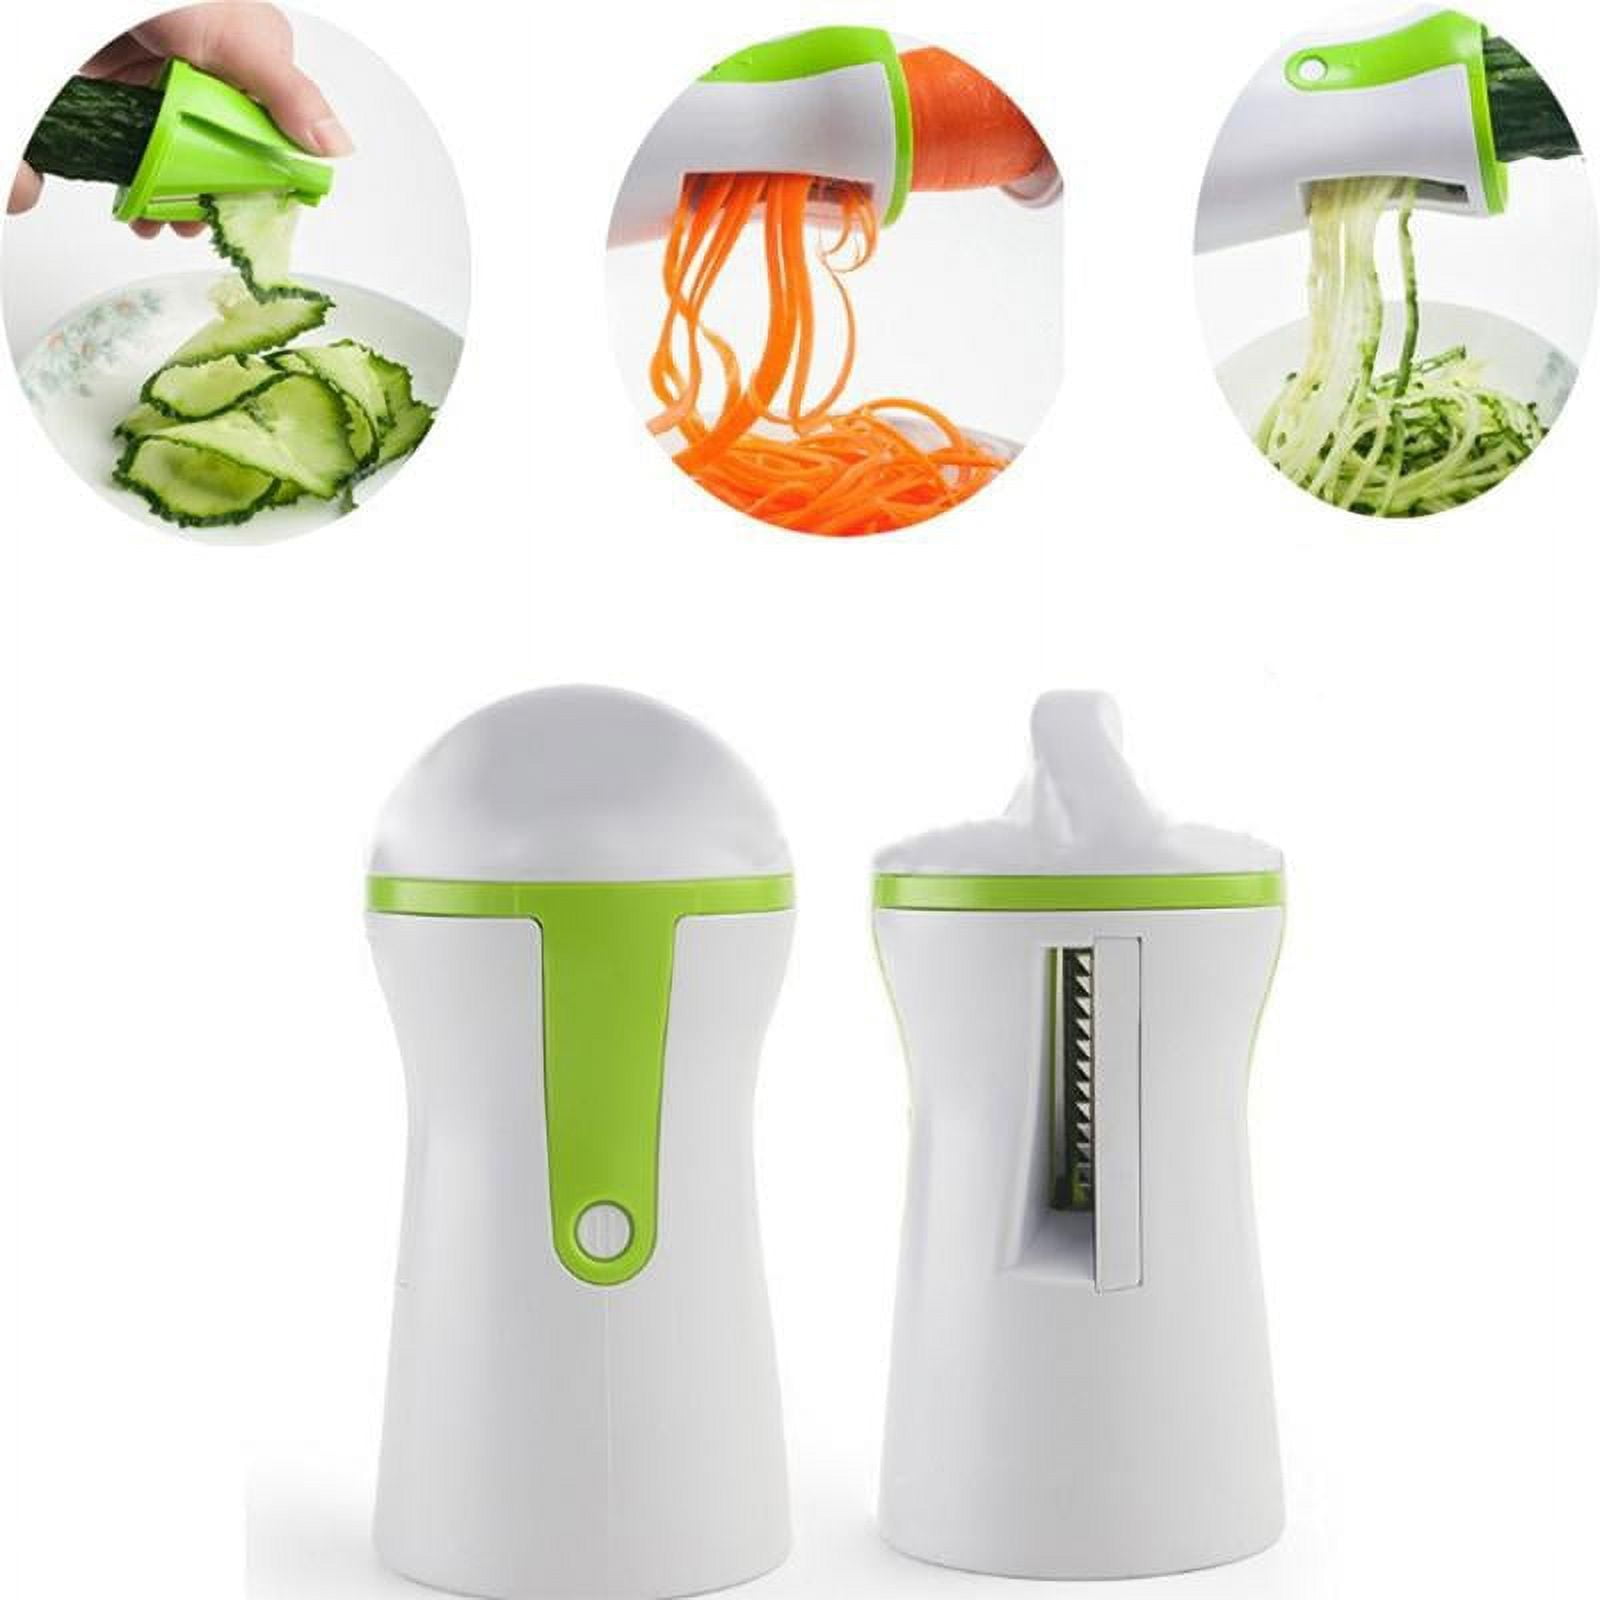 Nuvantee Spiralizer for Veggies - Zucchini Noodle Maker Slicer w/ 5 Blade Cutter Attachments - Vegetable Spiralizer for Cucumber Slicer, Curly Fries